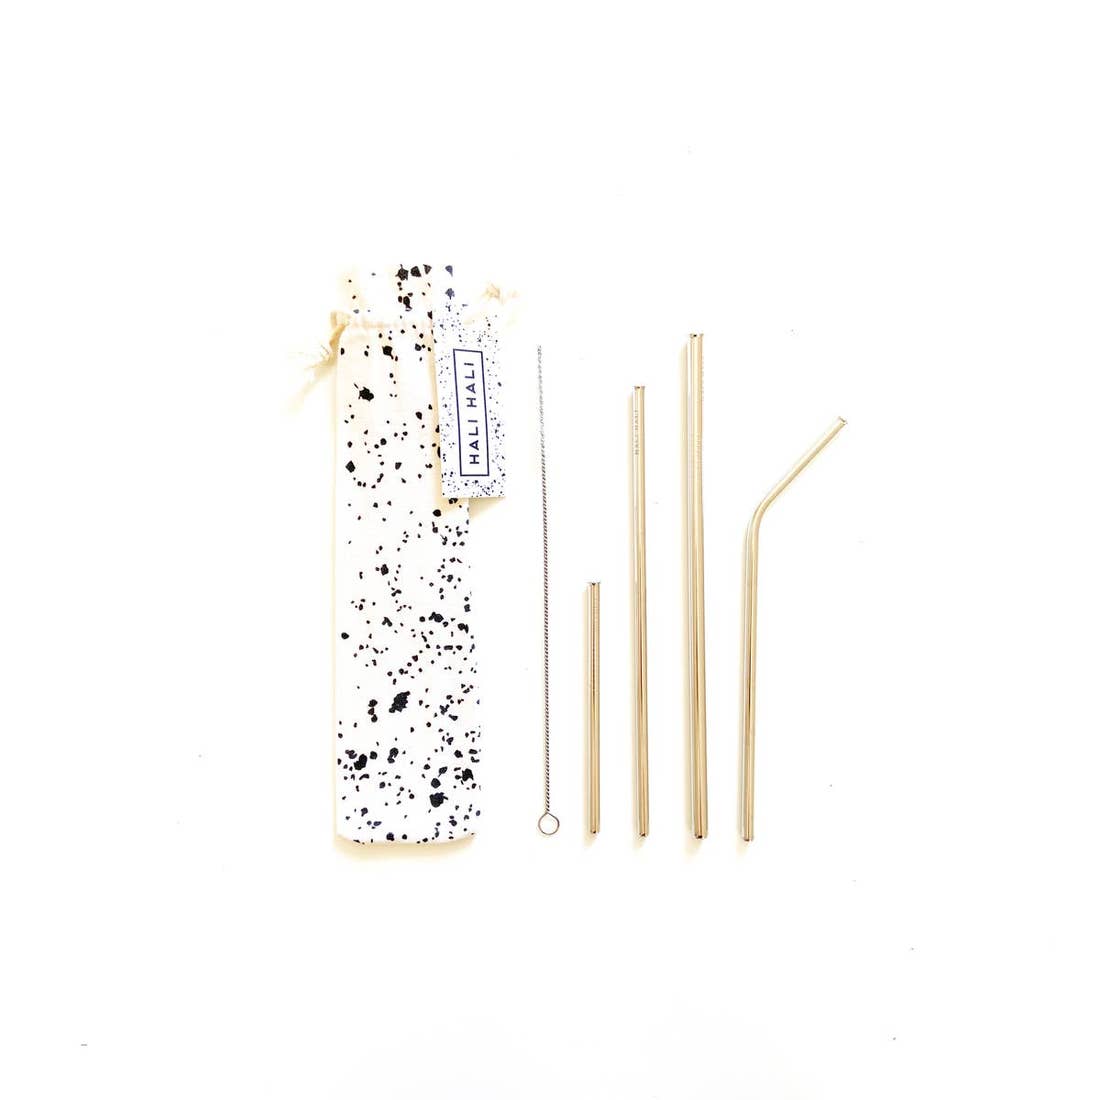 6 piece straw reusable straw set in splatter print